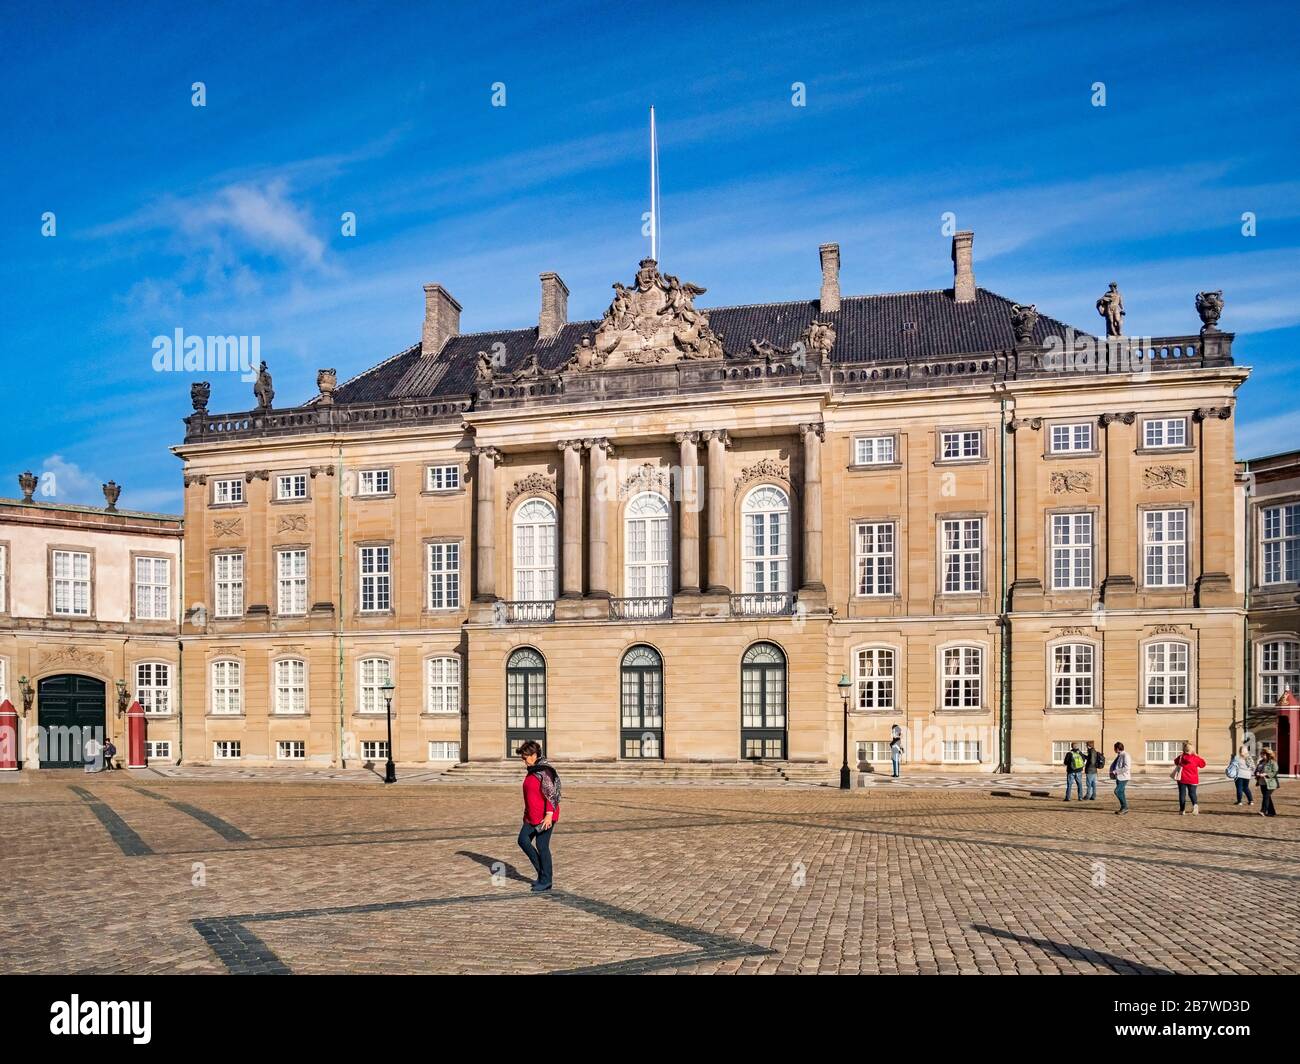 23 September 2018: Copenhagen, Denmark -  Christian IX's Palace in the Amalienborg Palace complex, winter residence of the Danish royal family. Stock Photo